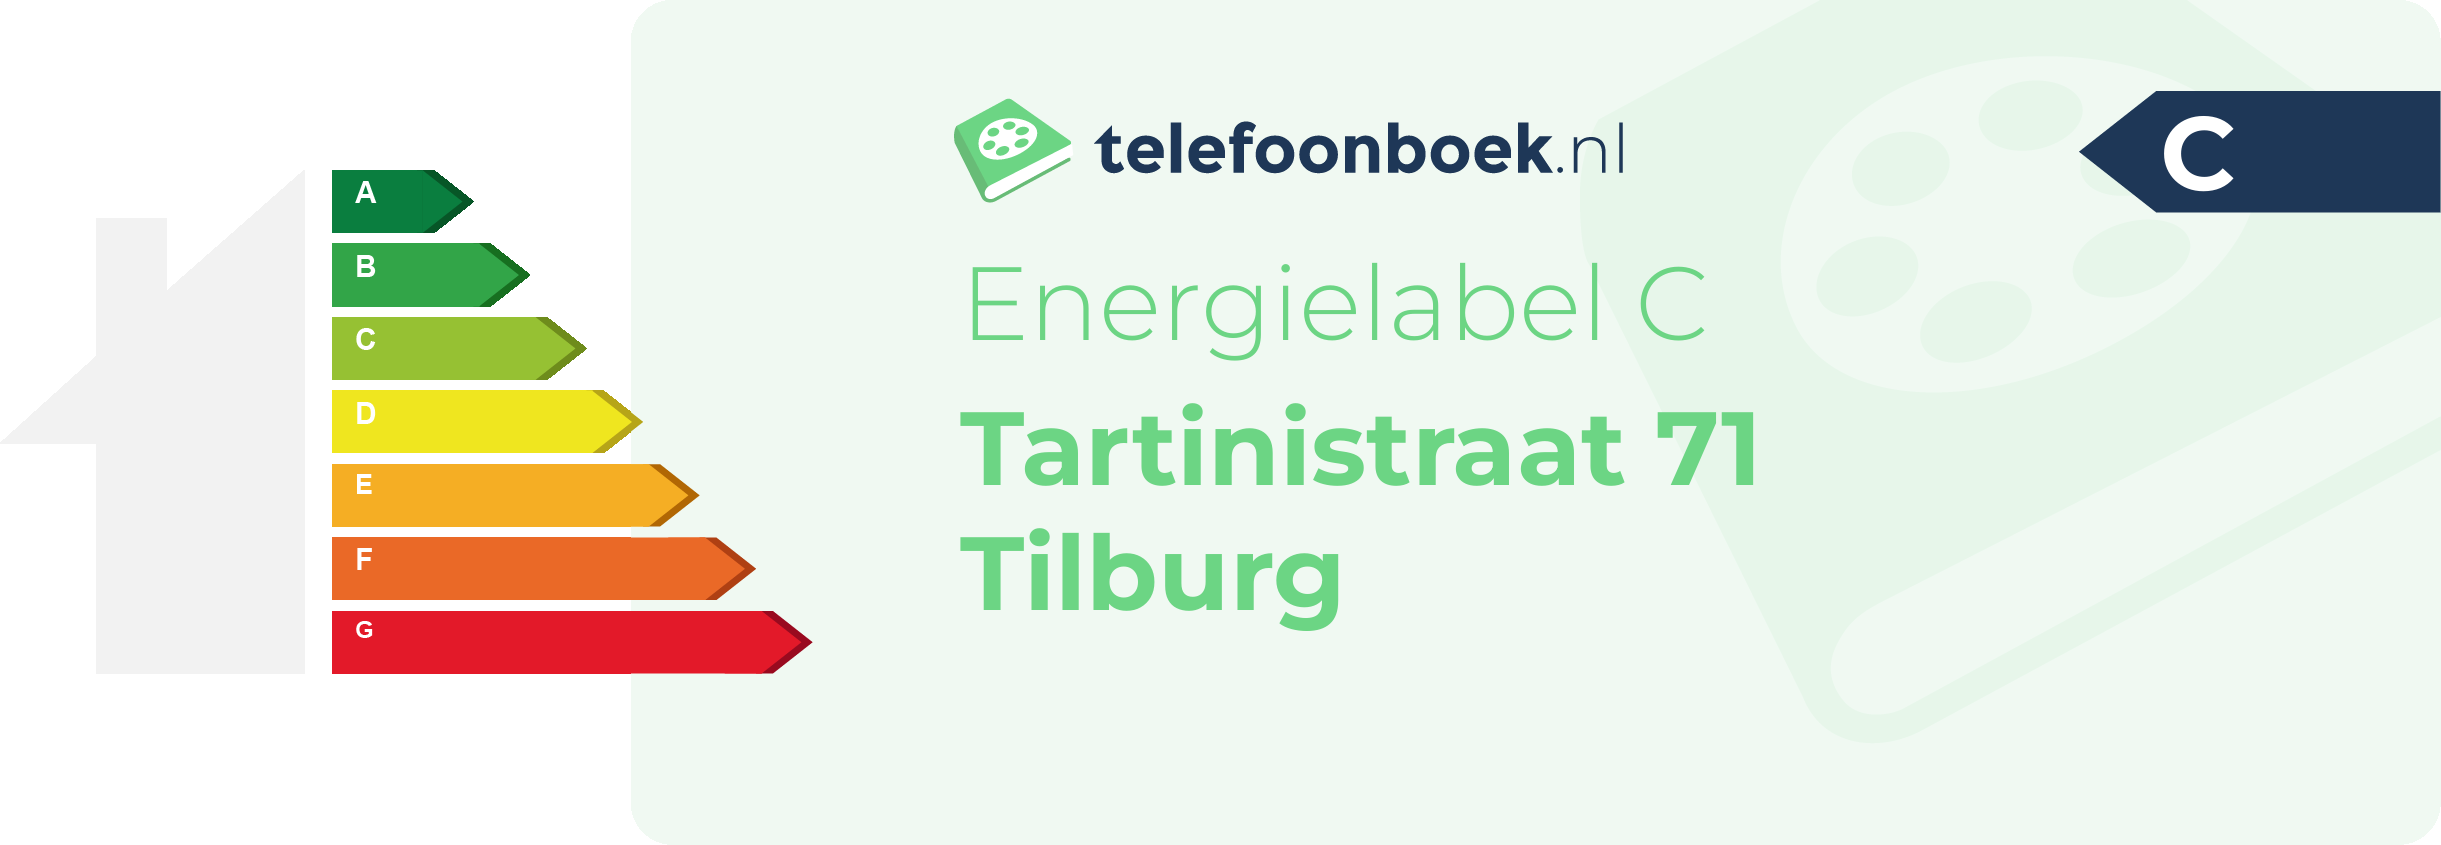 Energielabel Tartinistraat 71 Tilburg